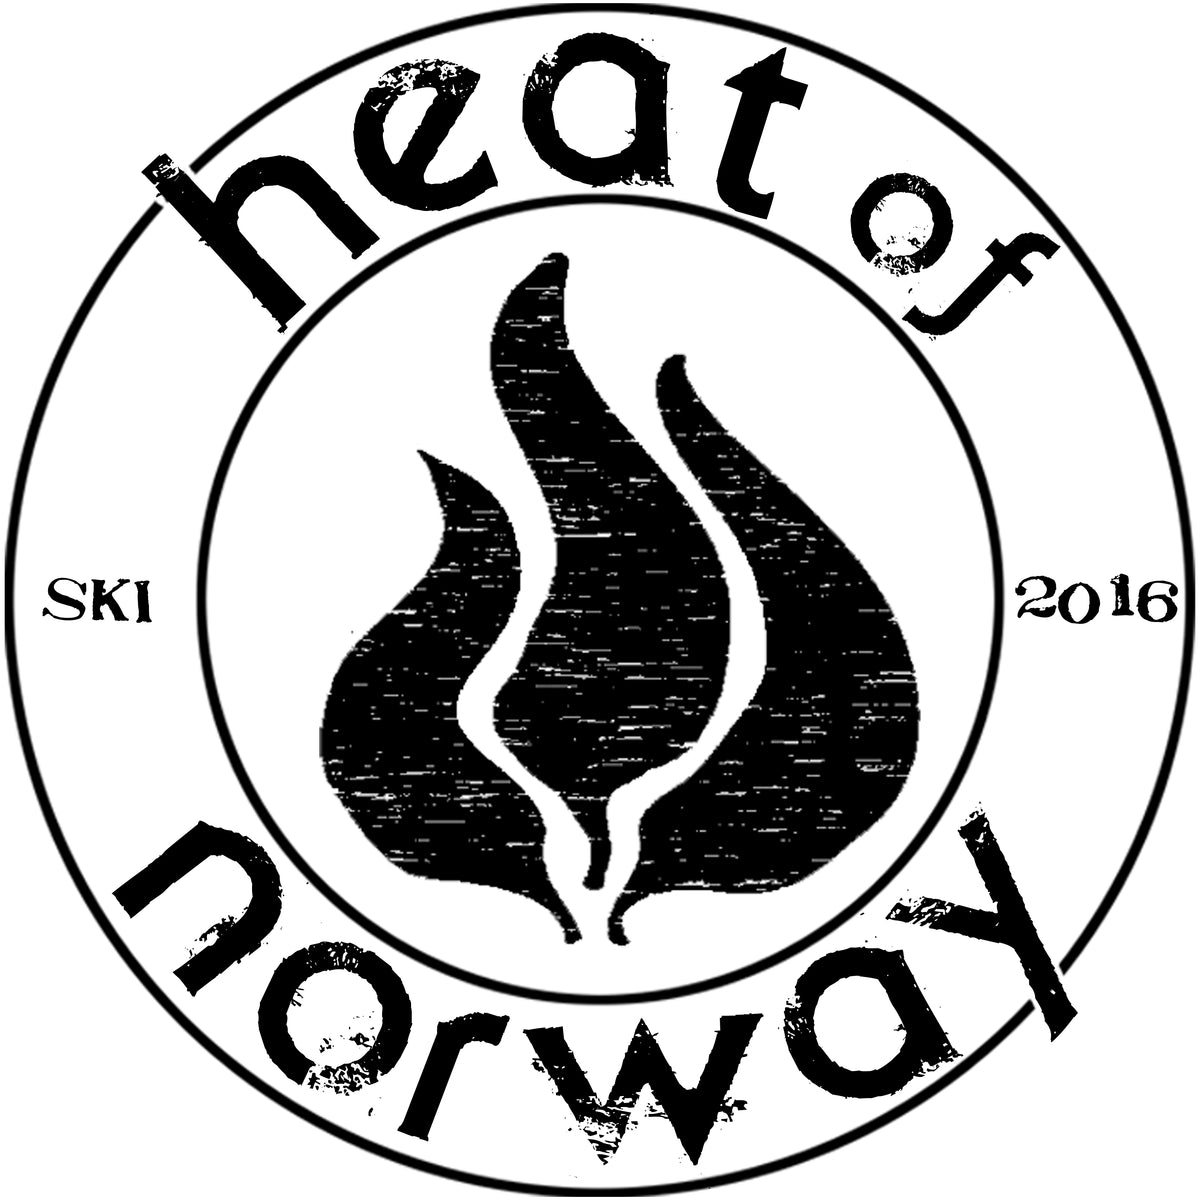 Heat of Norway